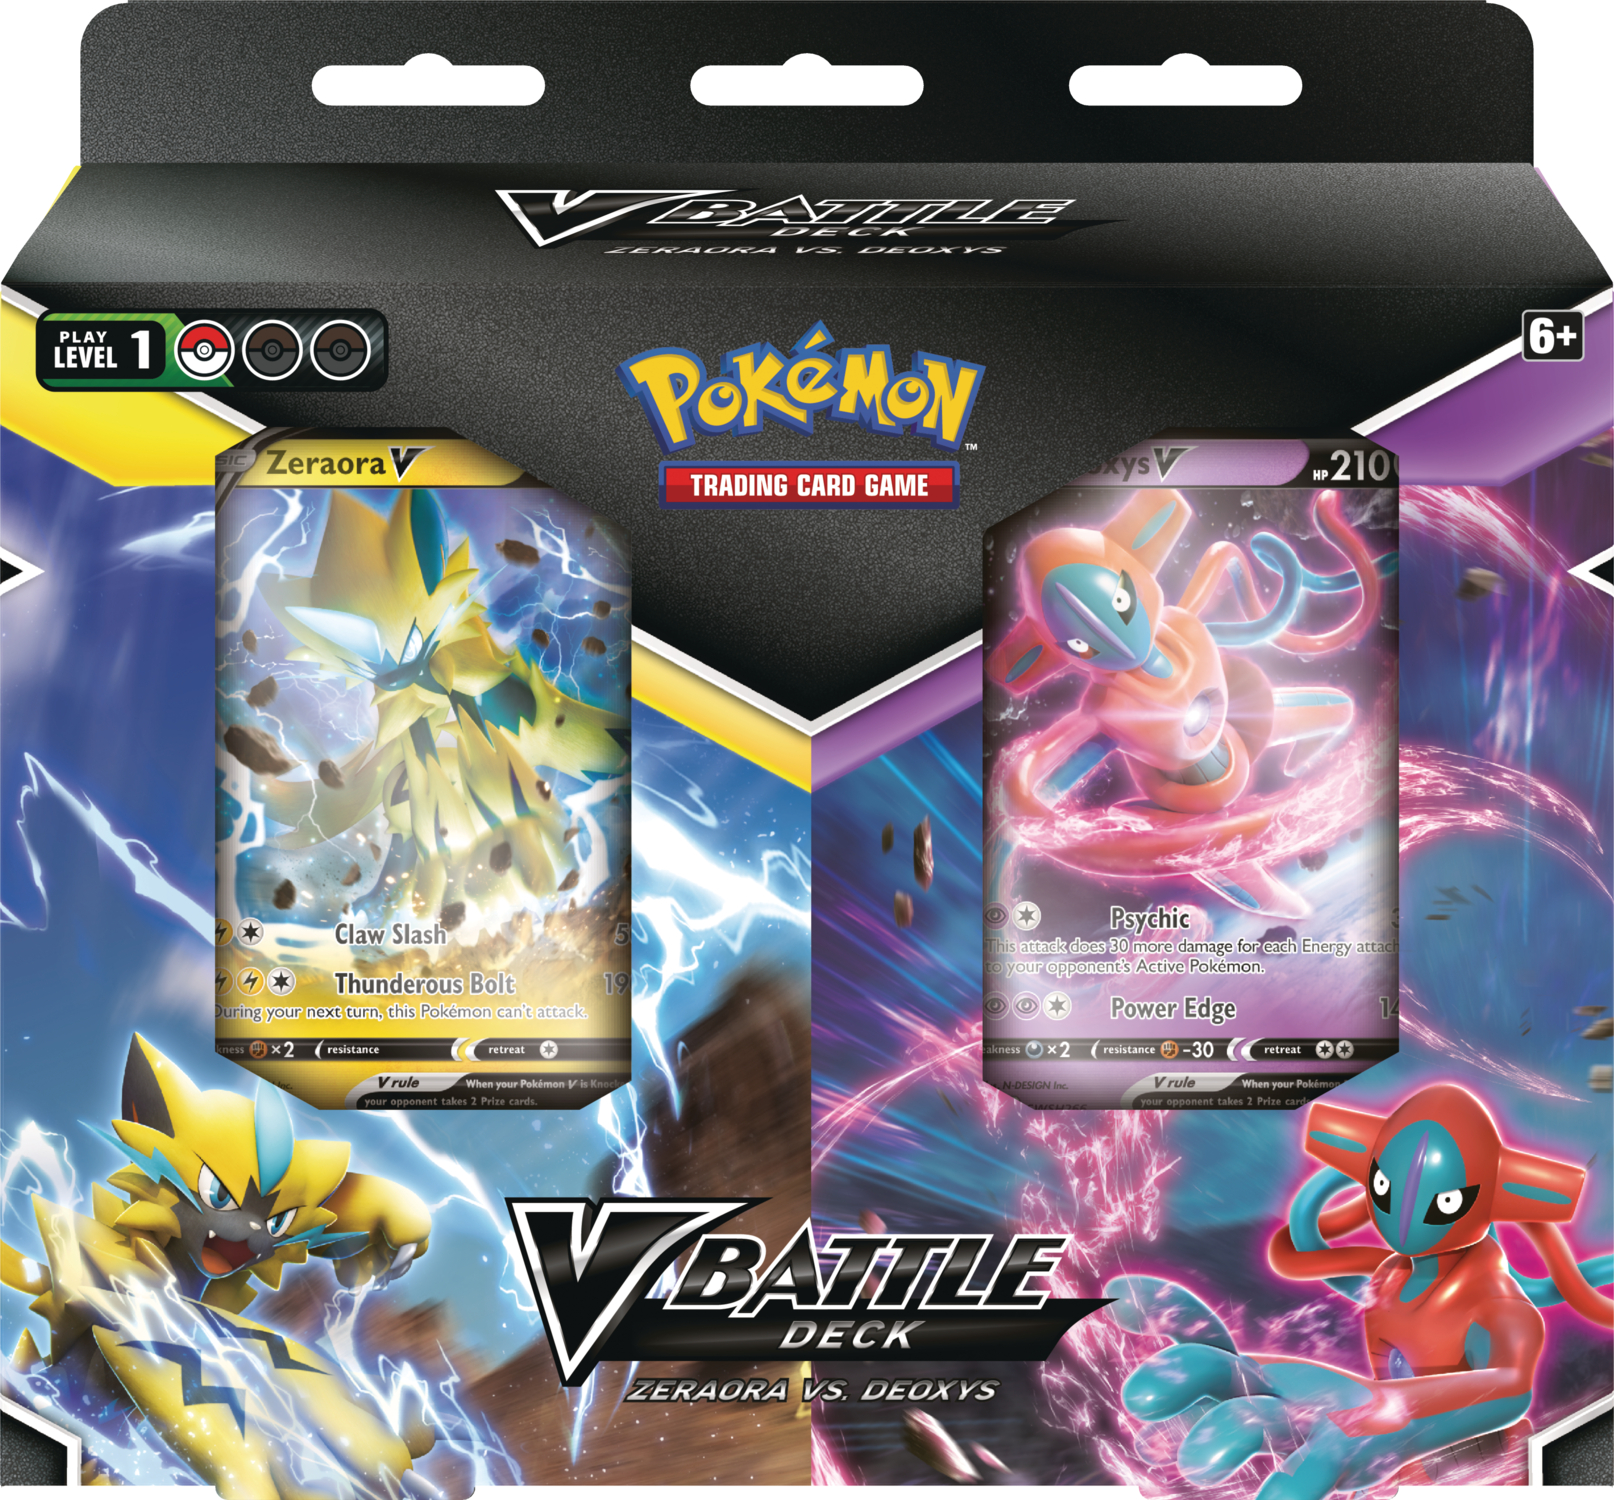 Deoxys and Zeraora VSTAR, VMAX get their Pokémon TCG release date